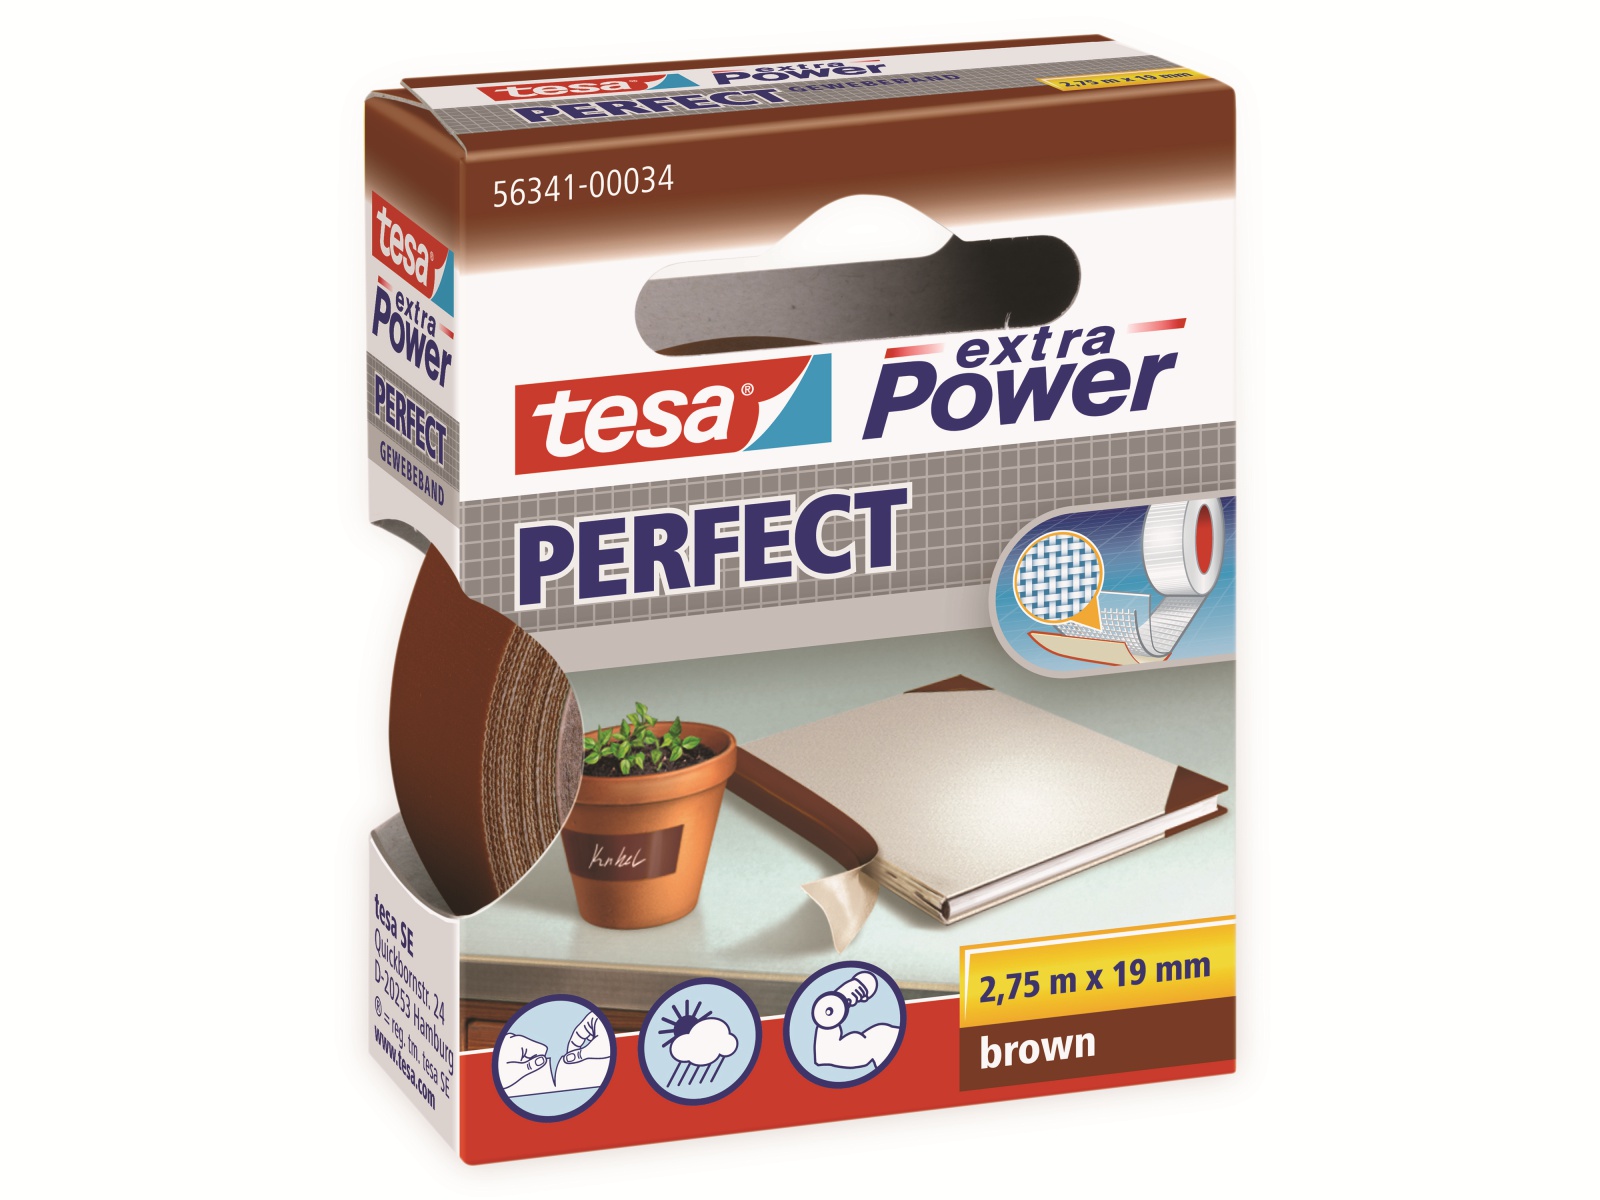 TESA extra Power® Perfect Gewebeband, braun, 2,75m:19mm, 56341-00034-03